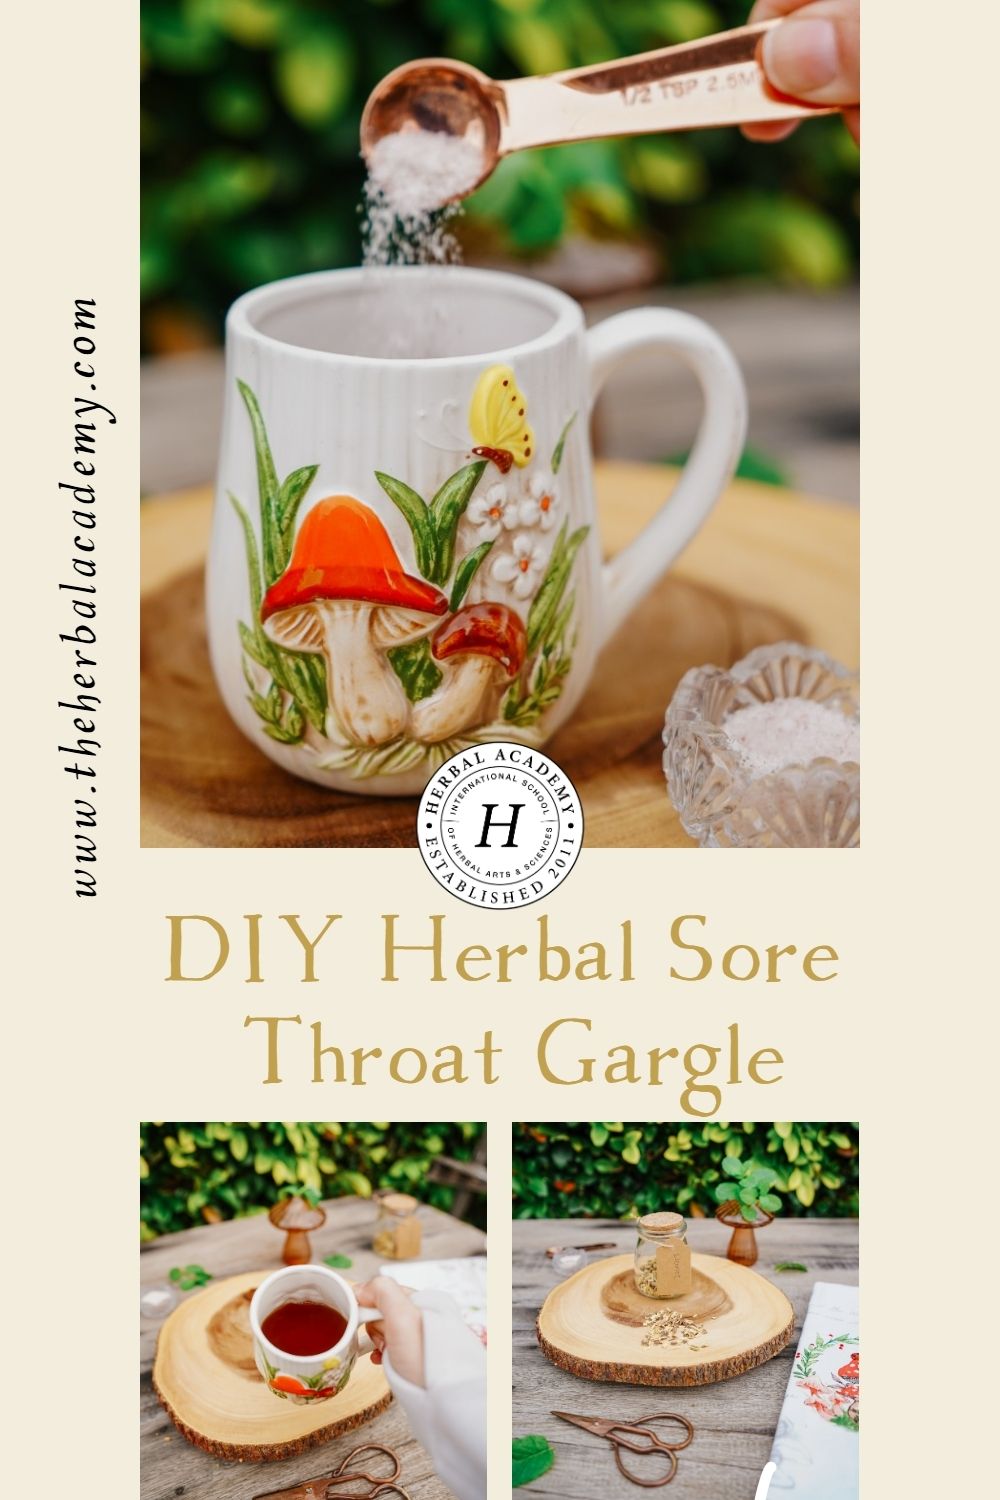 DIY Herbal Sore Throat Gargle | Herbal Academy | This classic Herbal Sore Throat Gargle recipe soothes sore throats and brings comfort to help you get well soon.